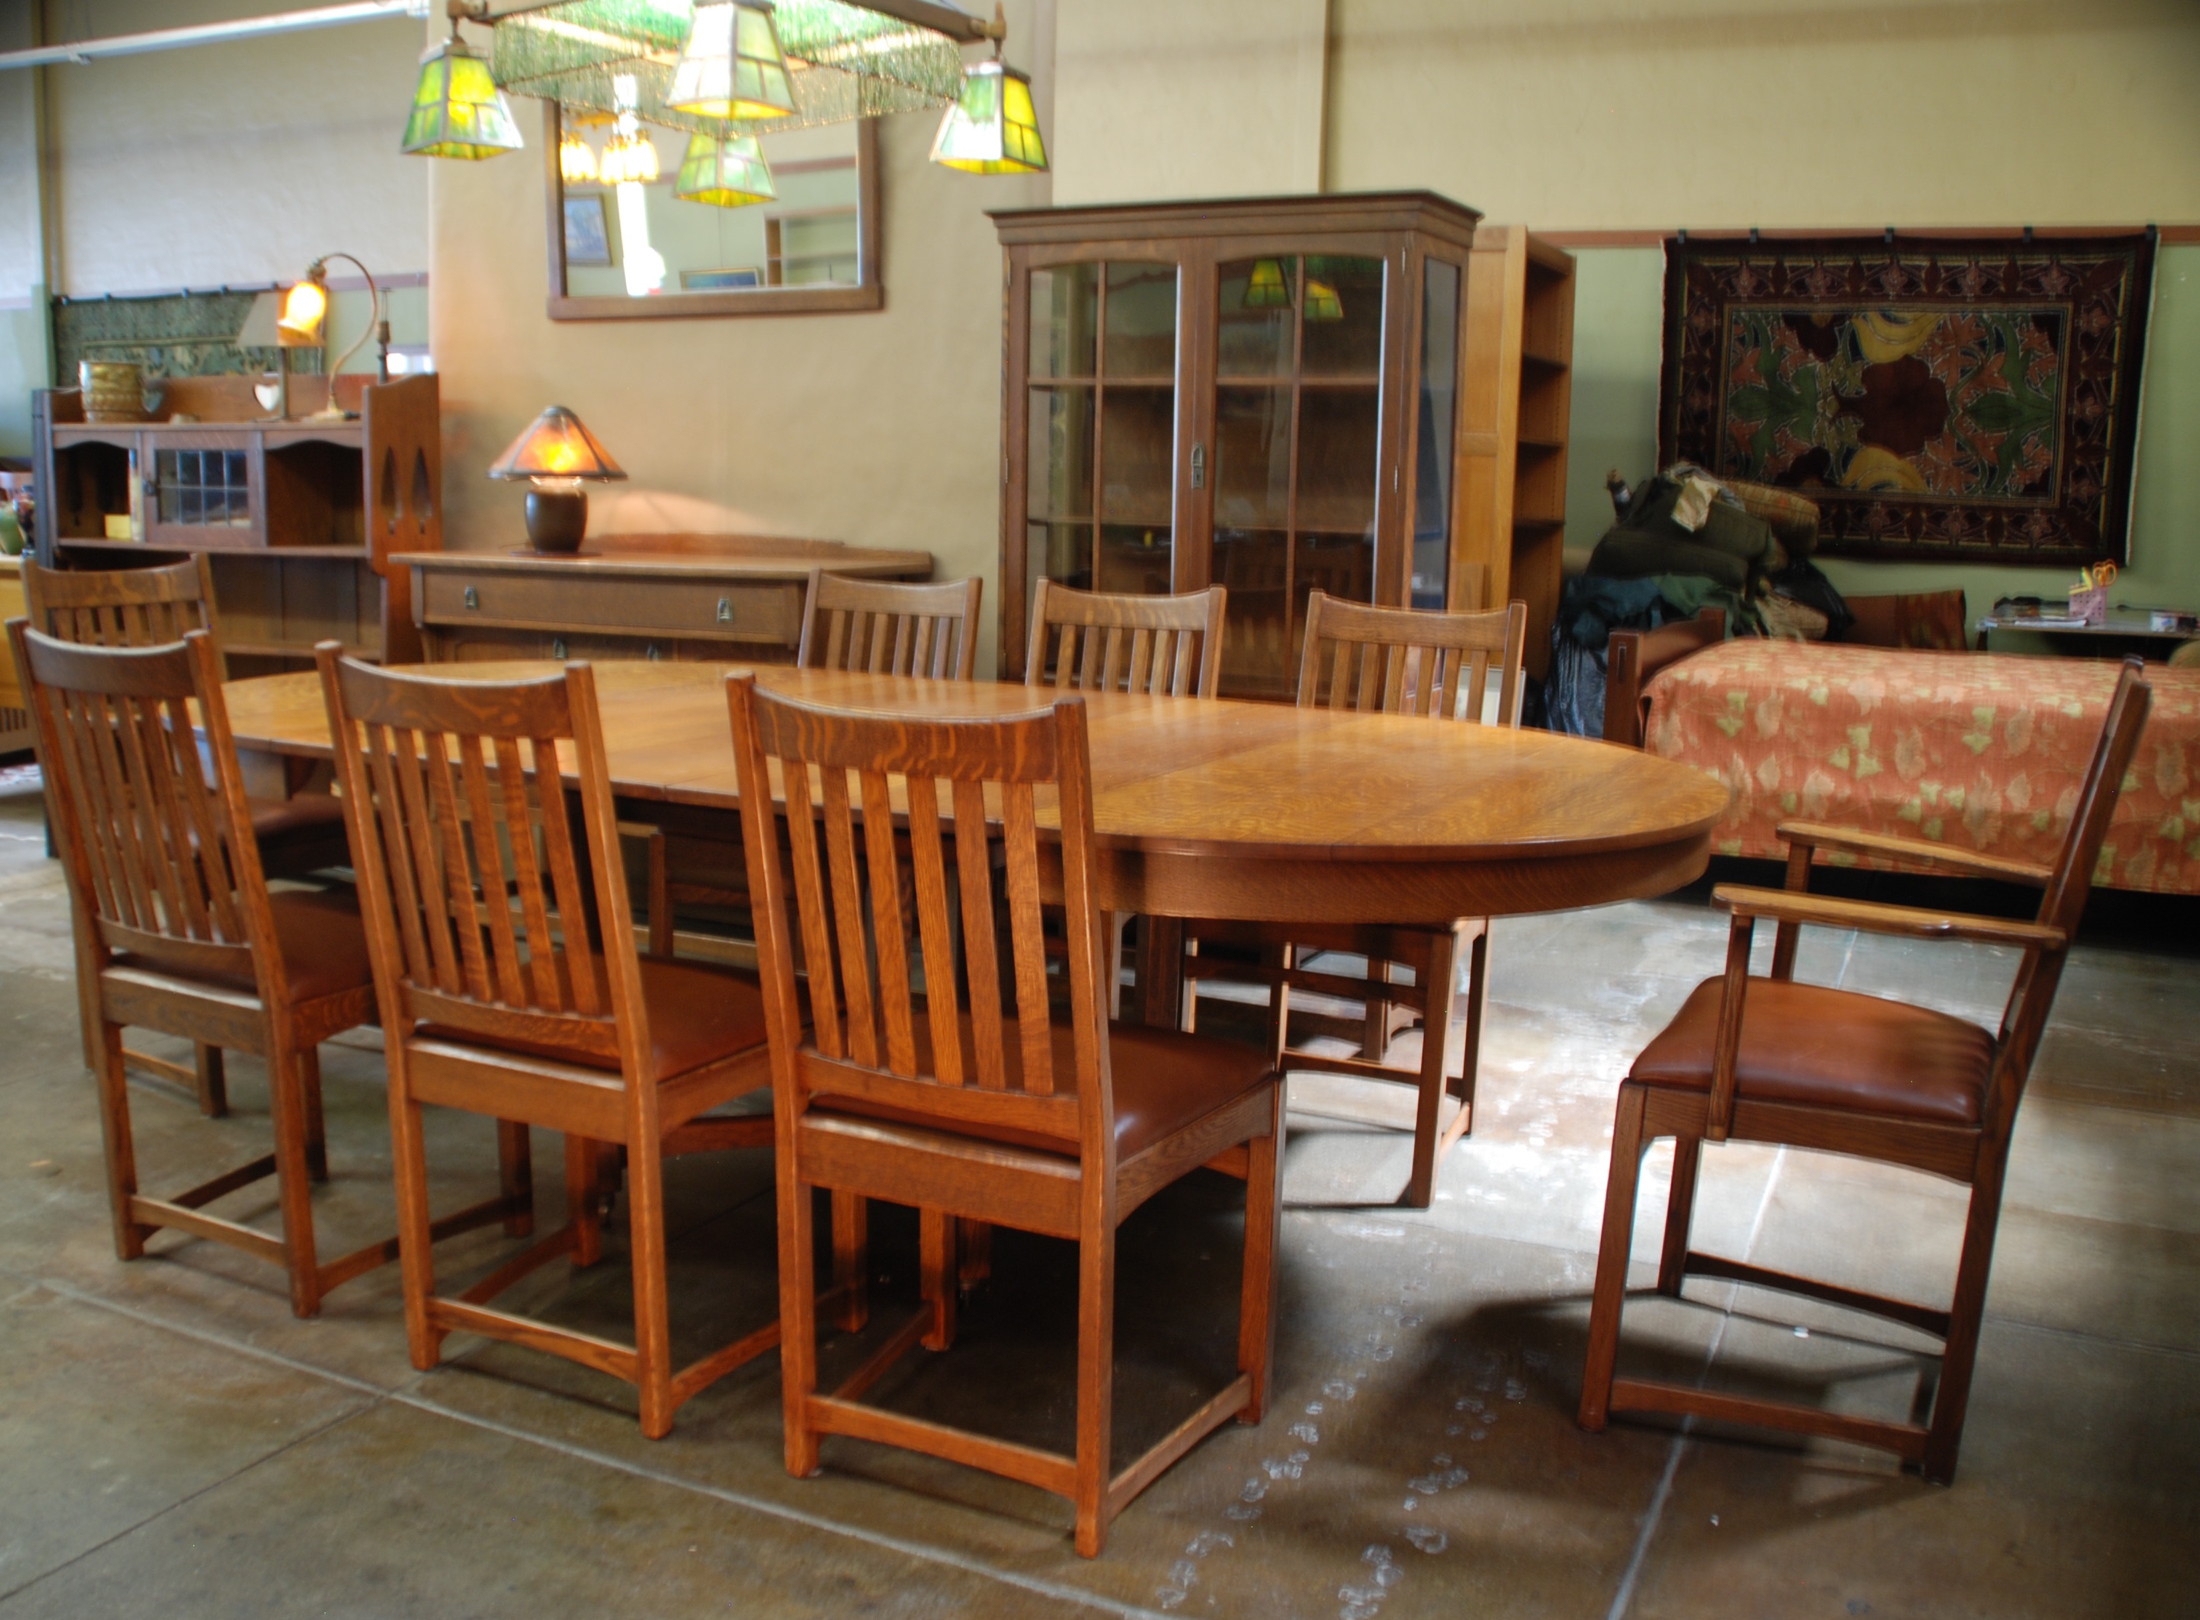 Voorhees Craftsman Mission Oak Furniture Lifetime intended for size 2200 X 1620